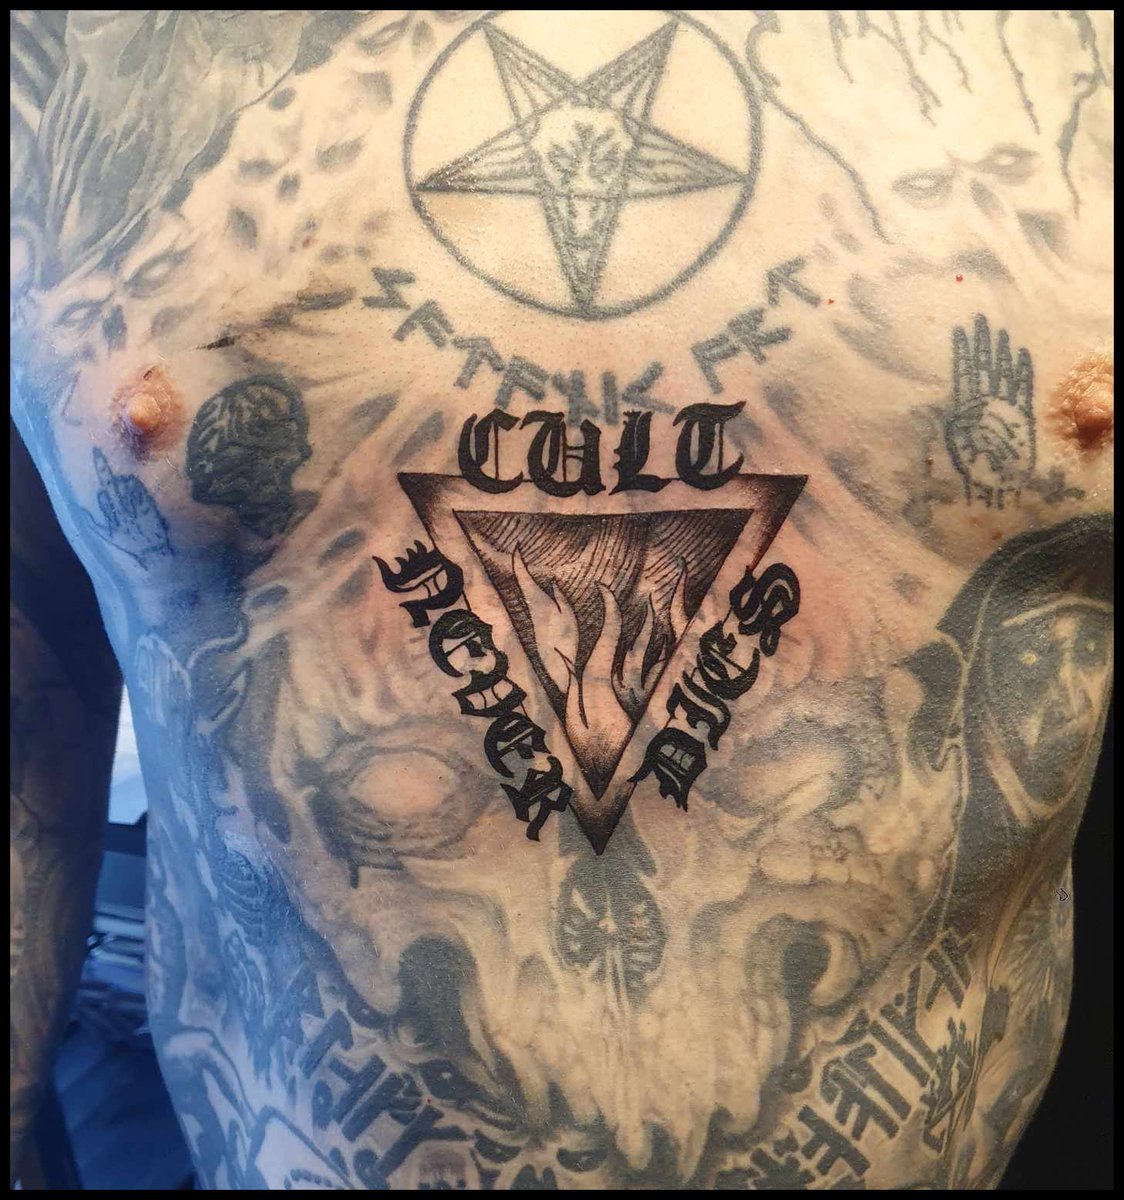 The Black Cult private tattoo studio.